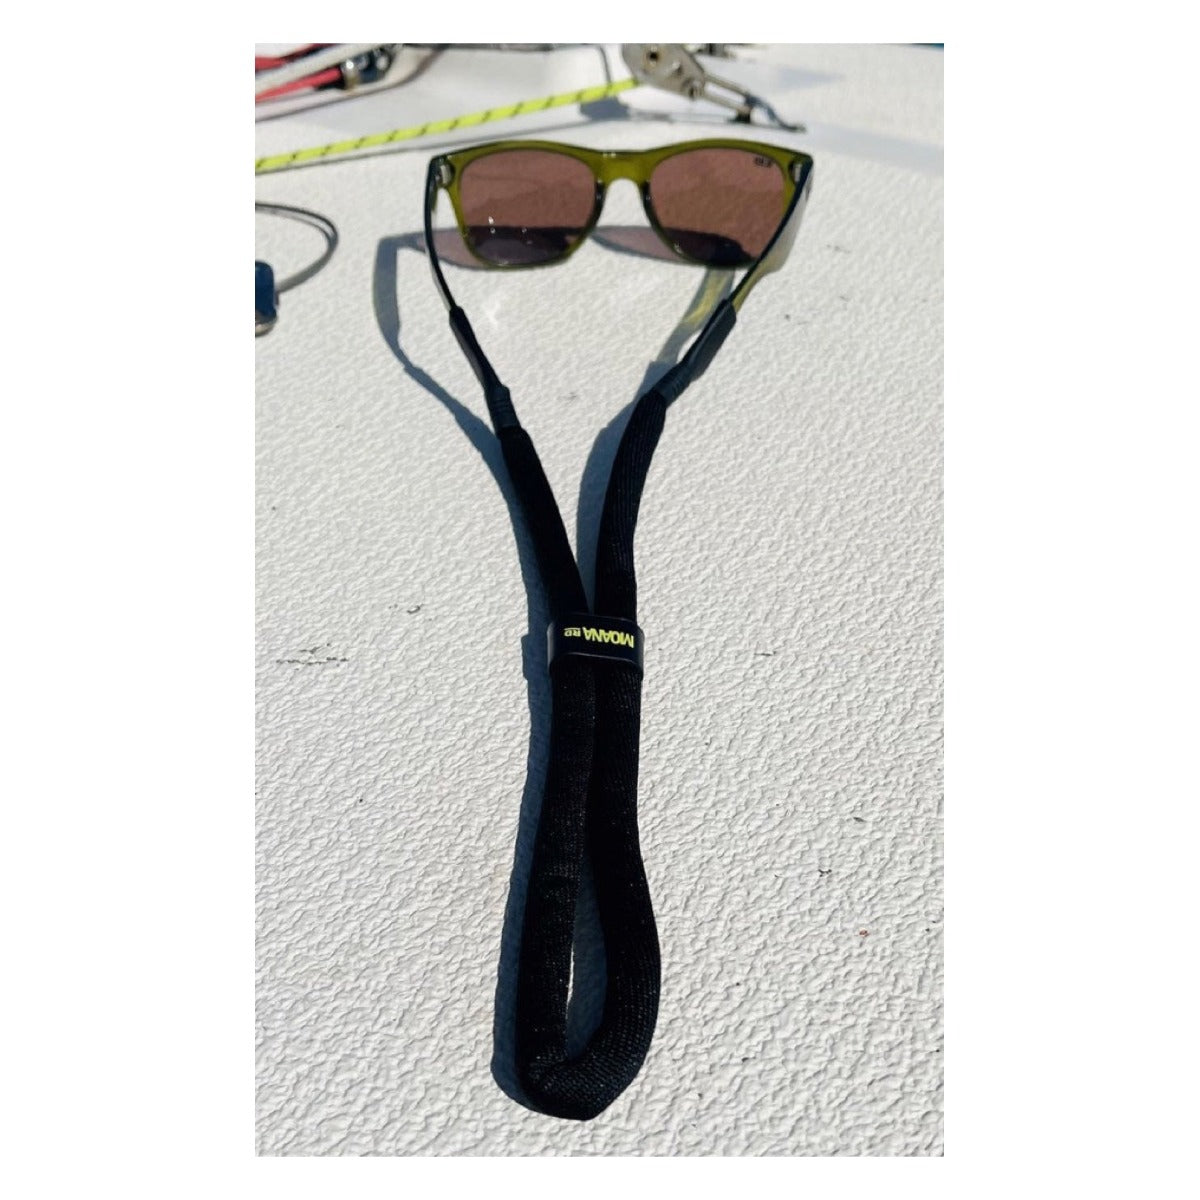 Sunglasses Flotation Device